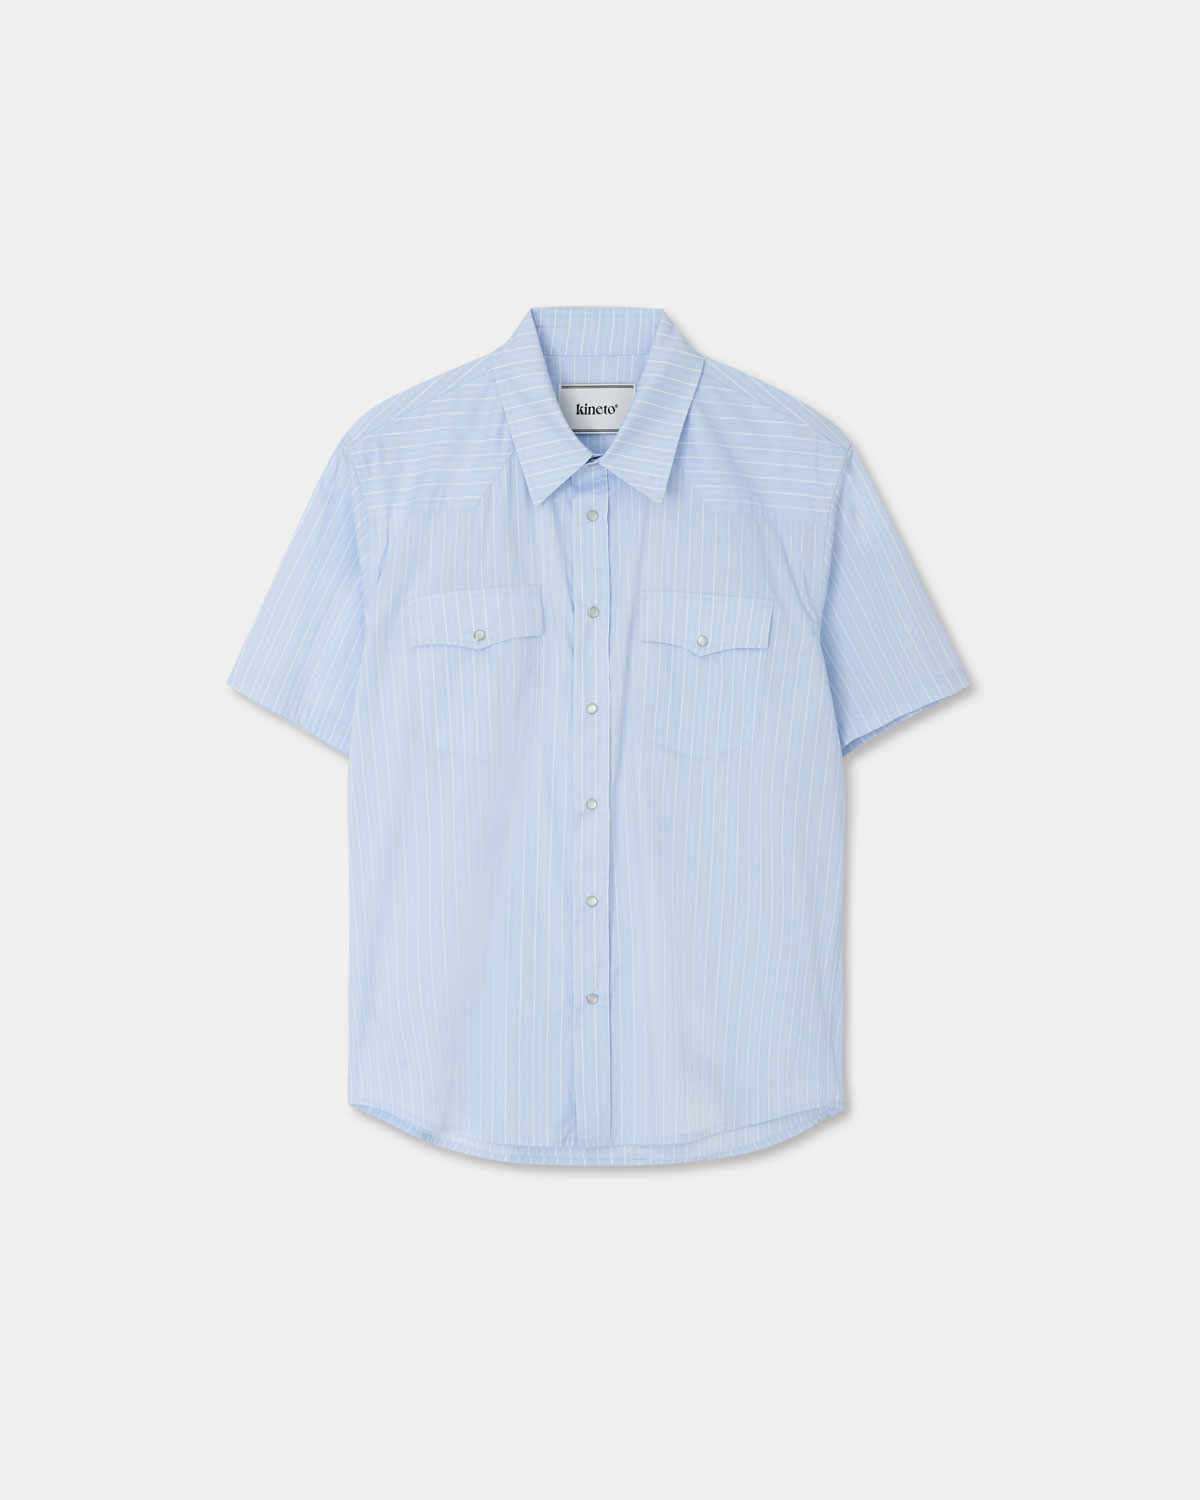 Western Stripe Pattern Shirt_Sky Blue_W_예약 배송 05/17